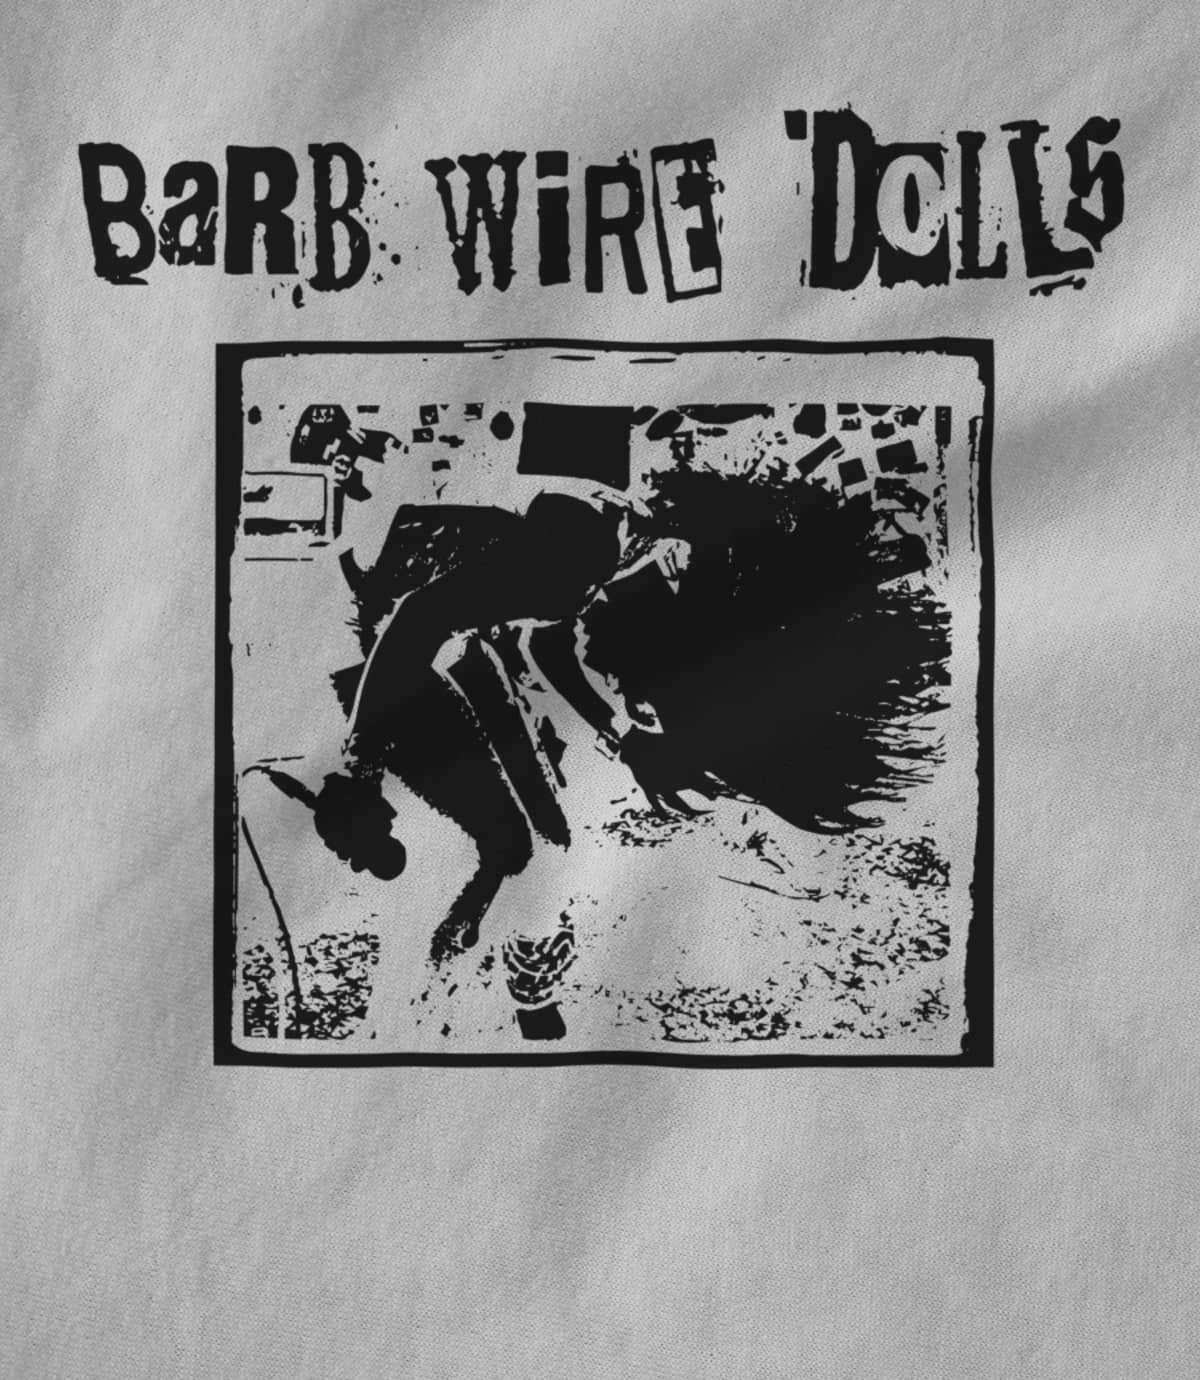 Barb wire dolls   official logo design inverted wrjjan